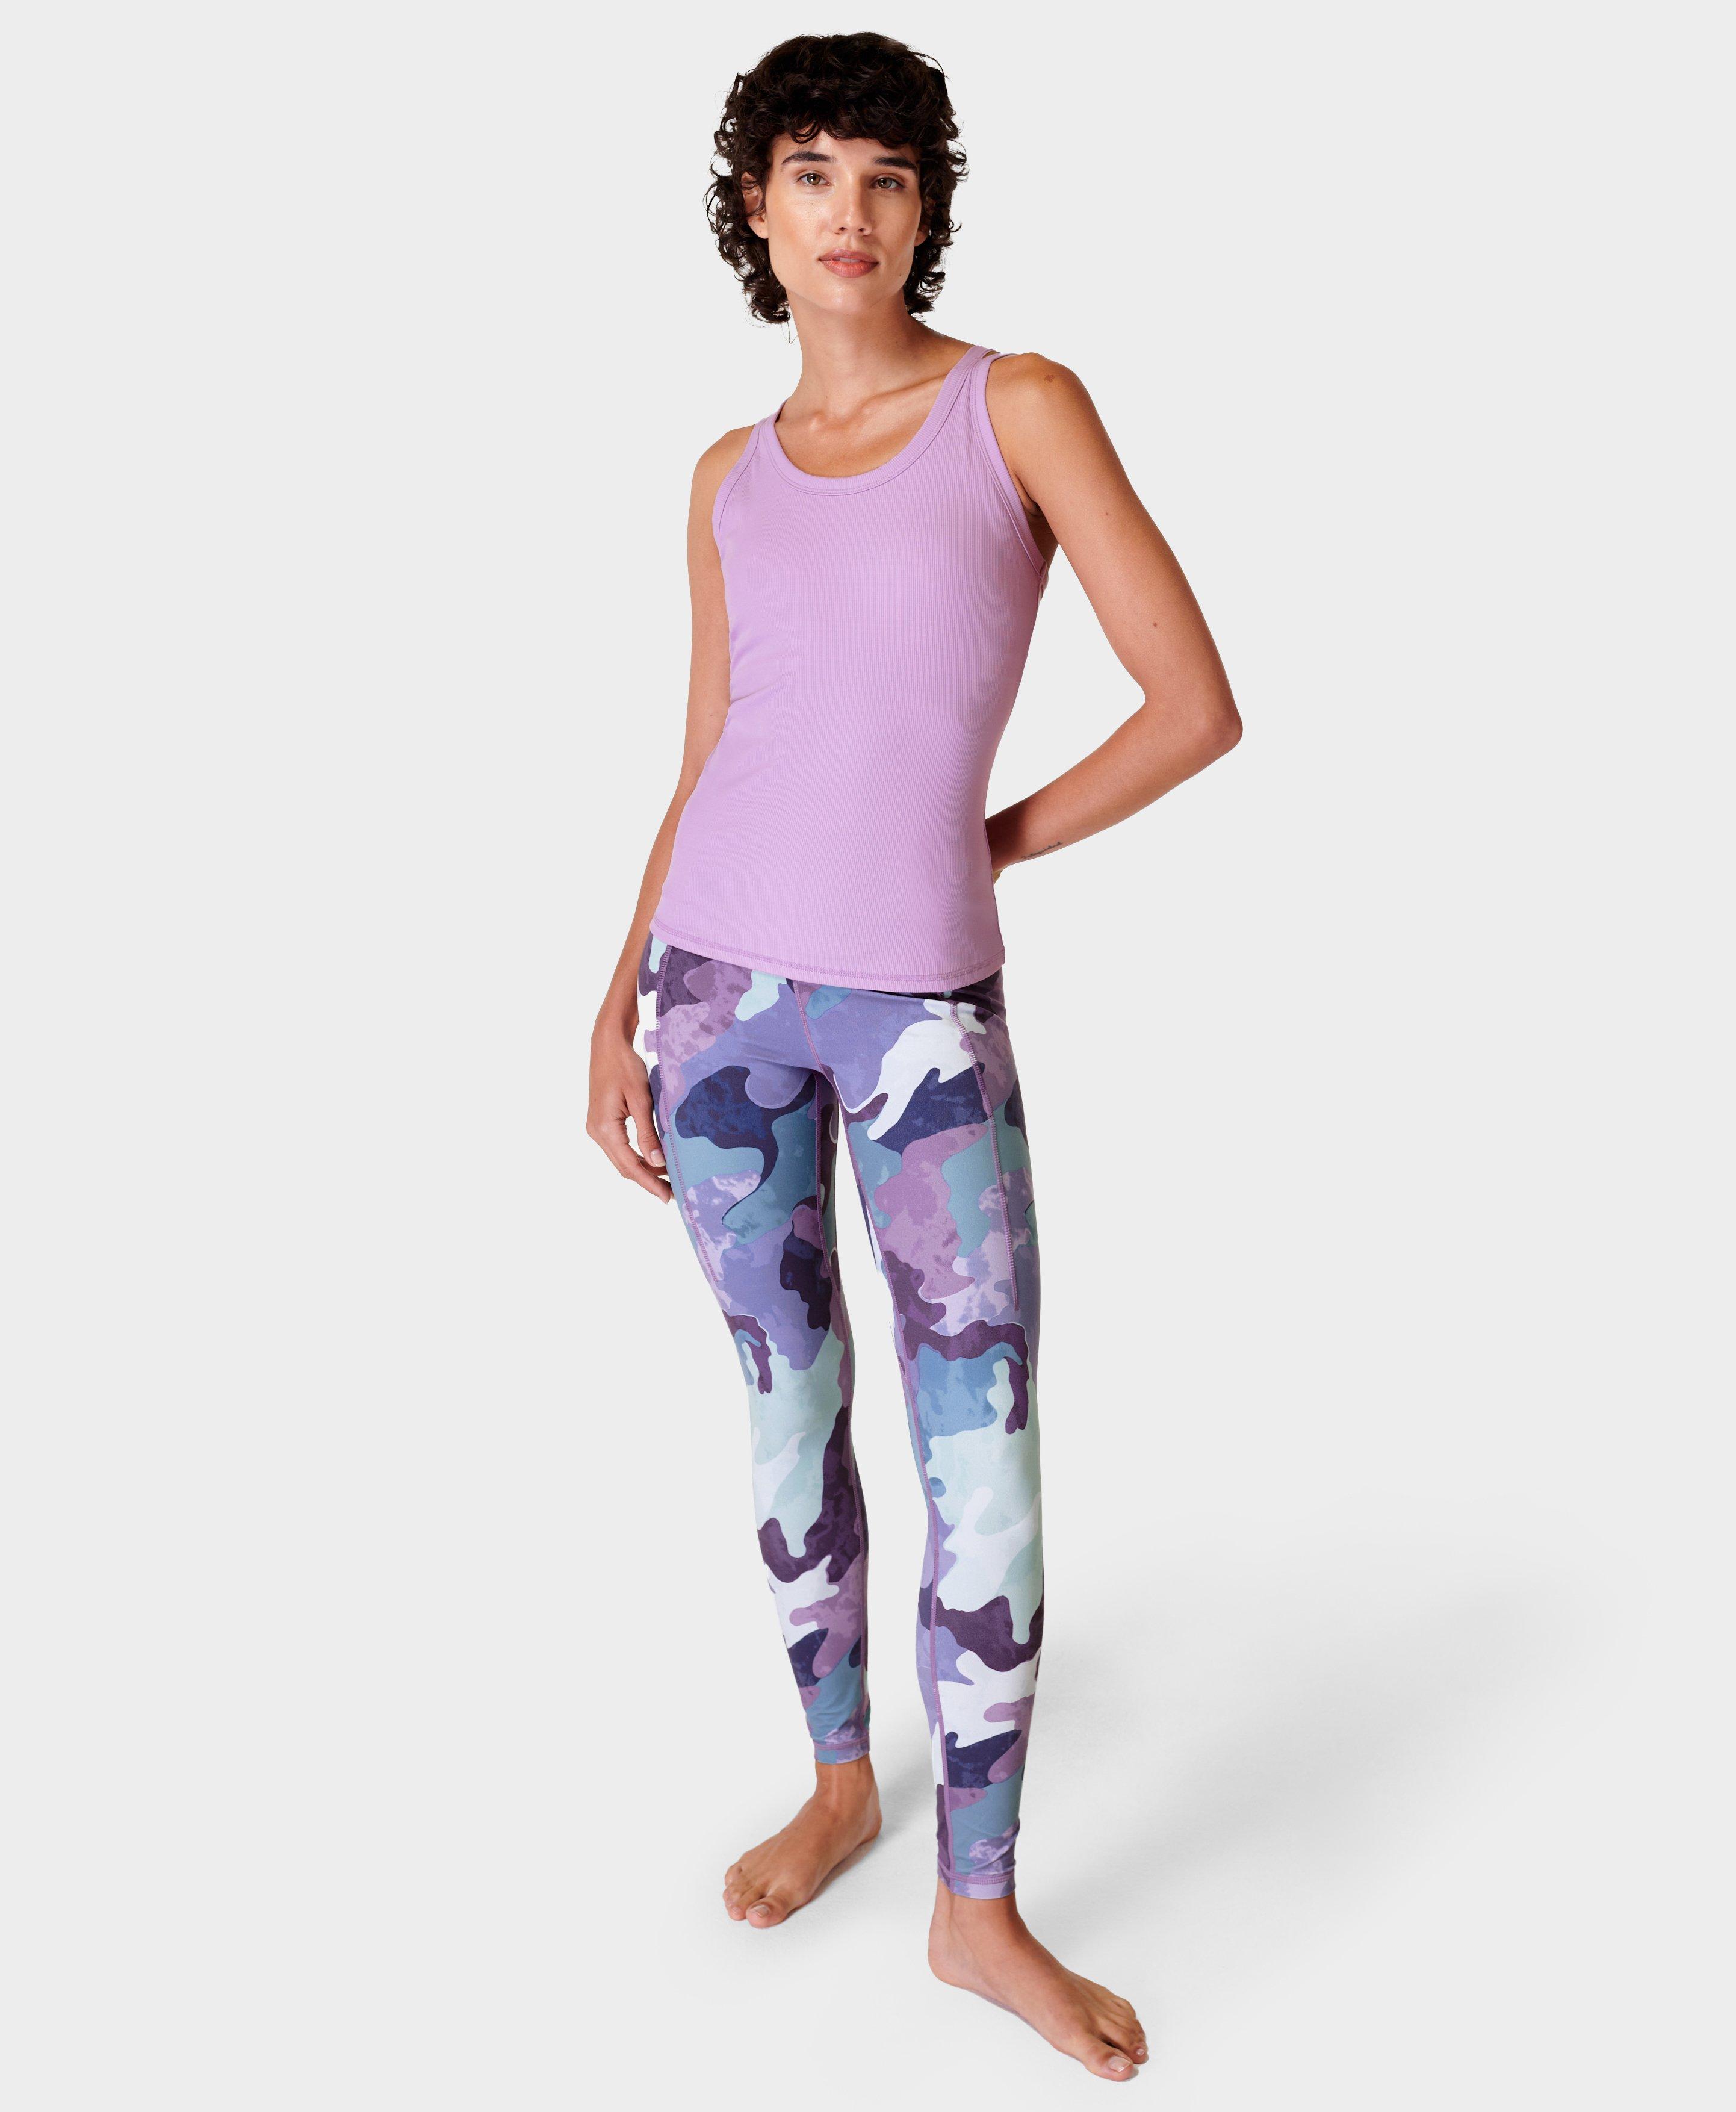 Super Soft Yoga Leggings - Green Camo Patch Print, Women's Leggings